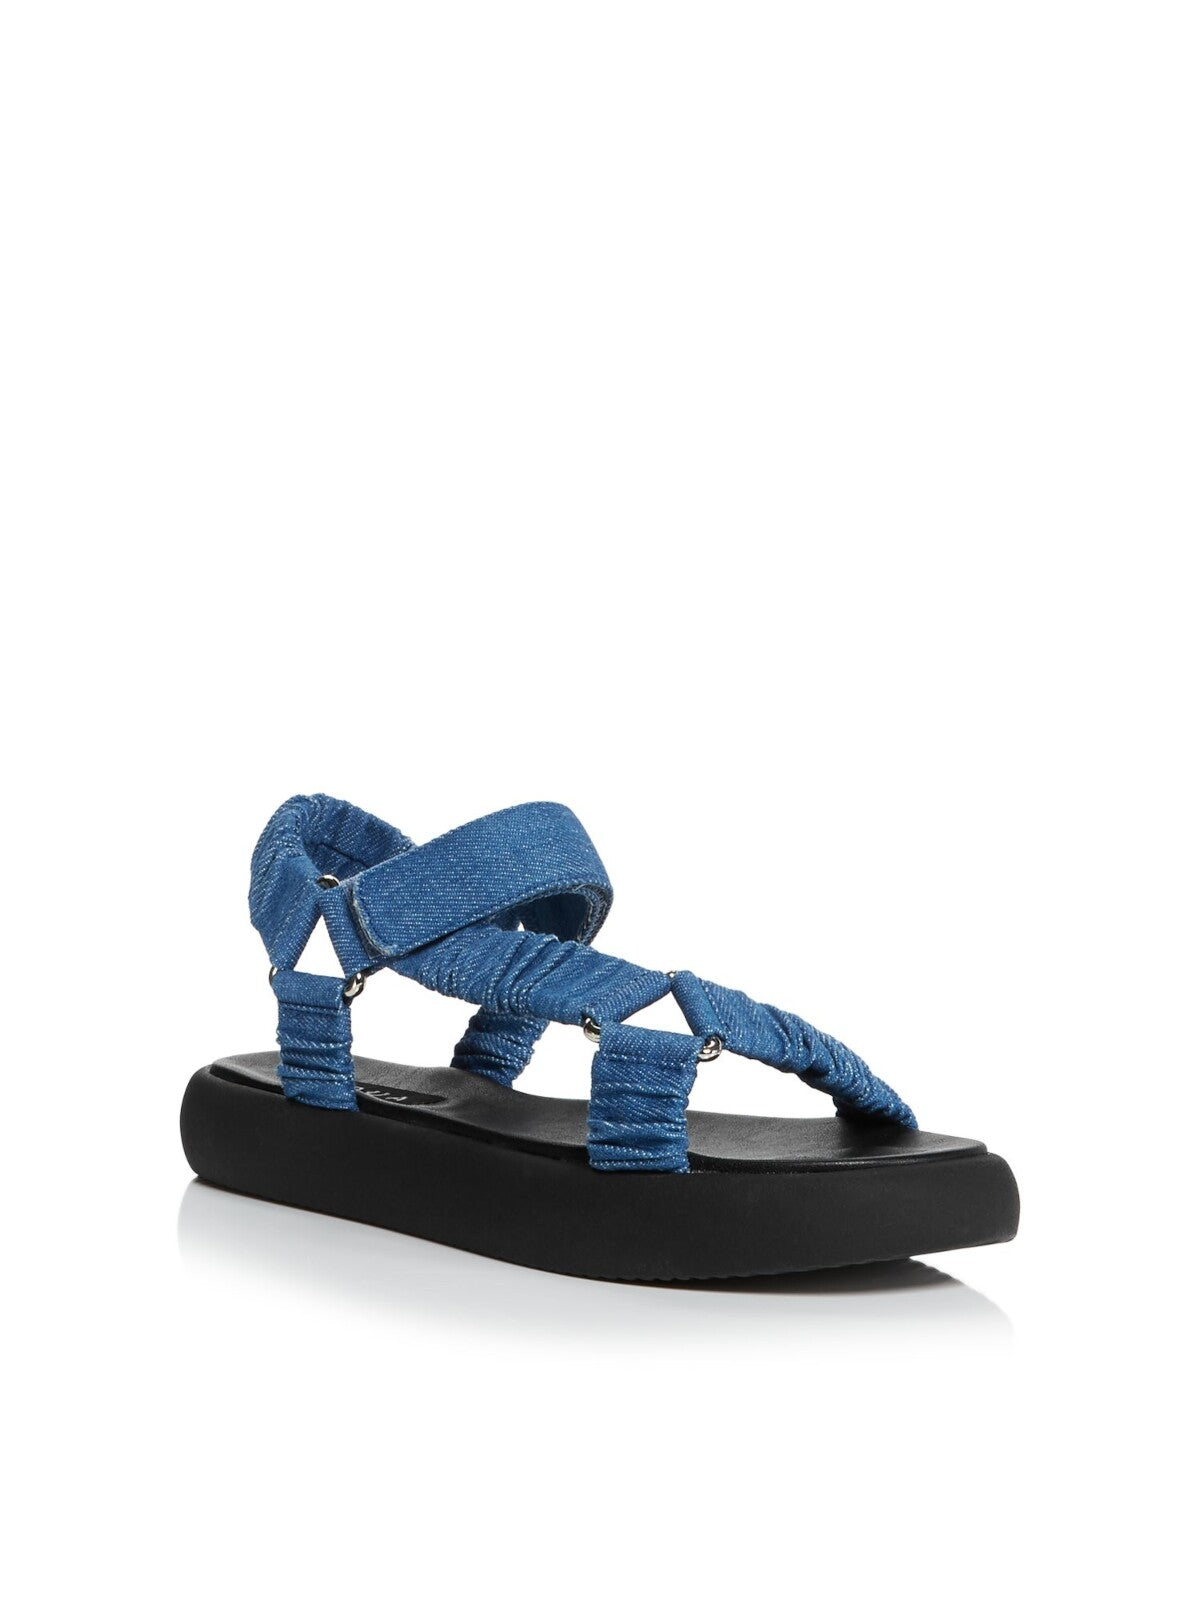 AQUA Womens Blue Metallic Triangle Detail Adjustable Tenly Round Toe Platform Slingback Sandal 8.5 M